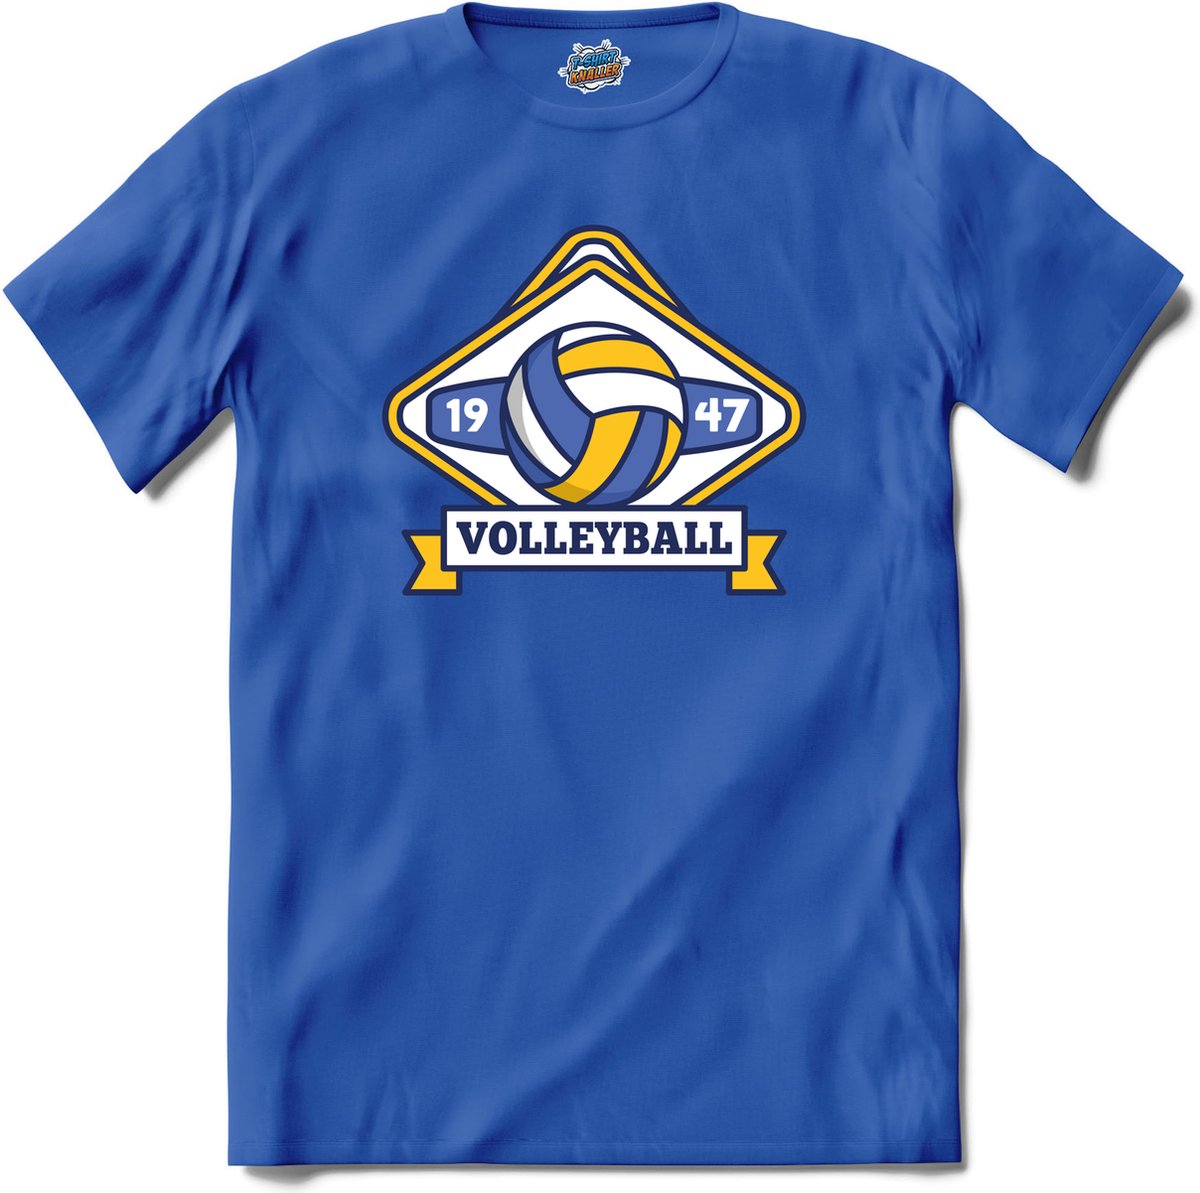 Volleybal sport - T-Shirt - Meisjes - Royal Blue - Maat 2 jaar